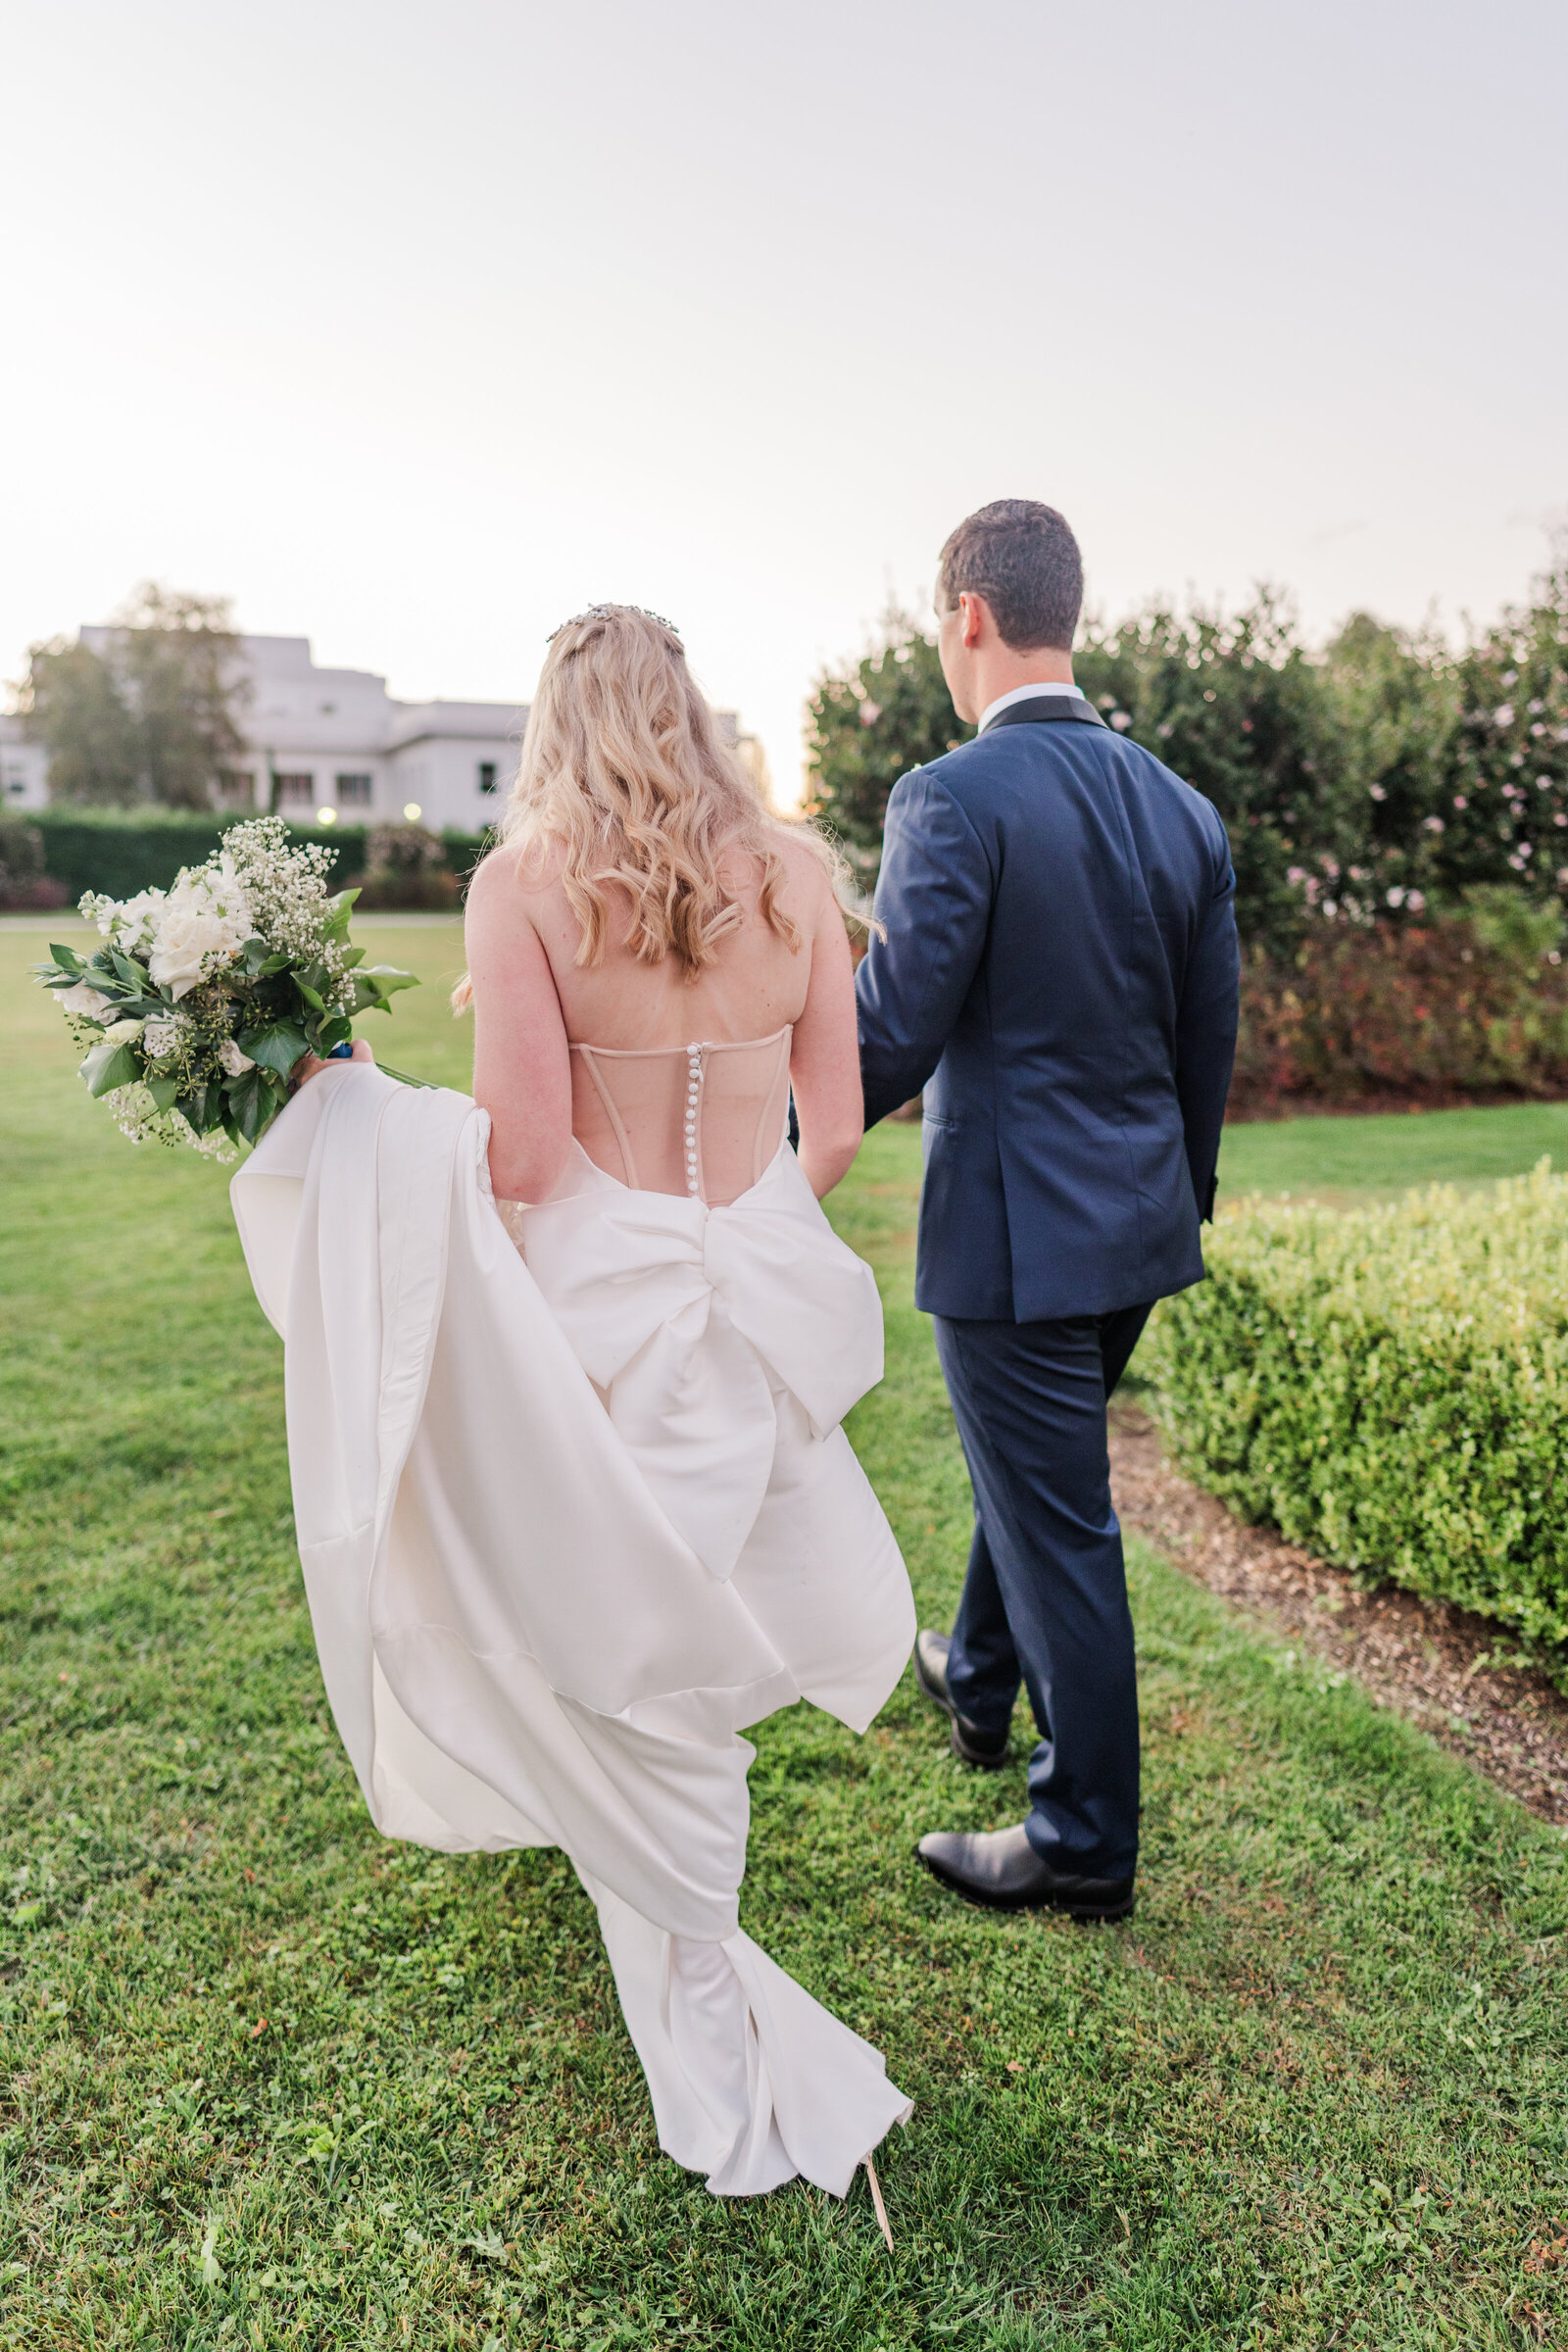 Canberra Wedding photographer- Zinette Hopper